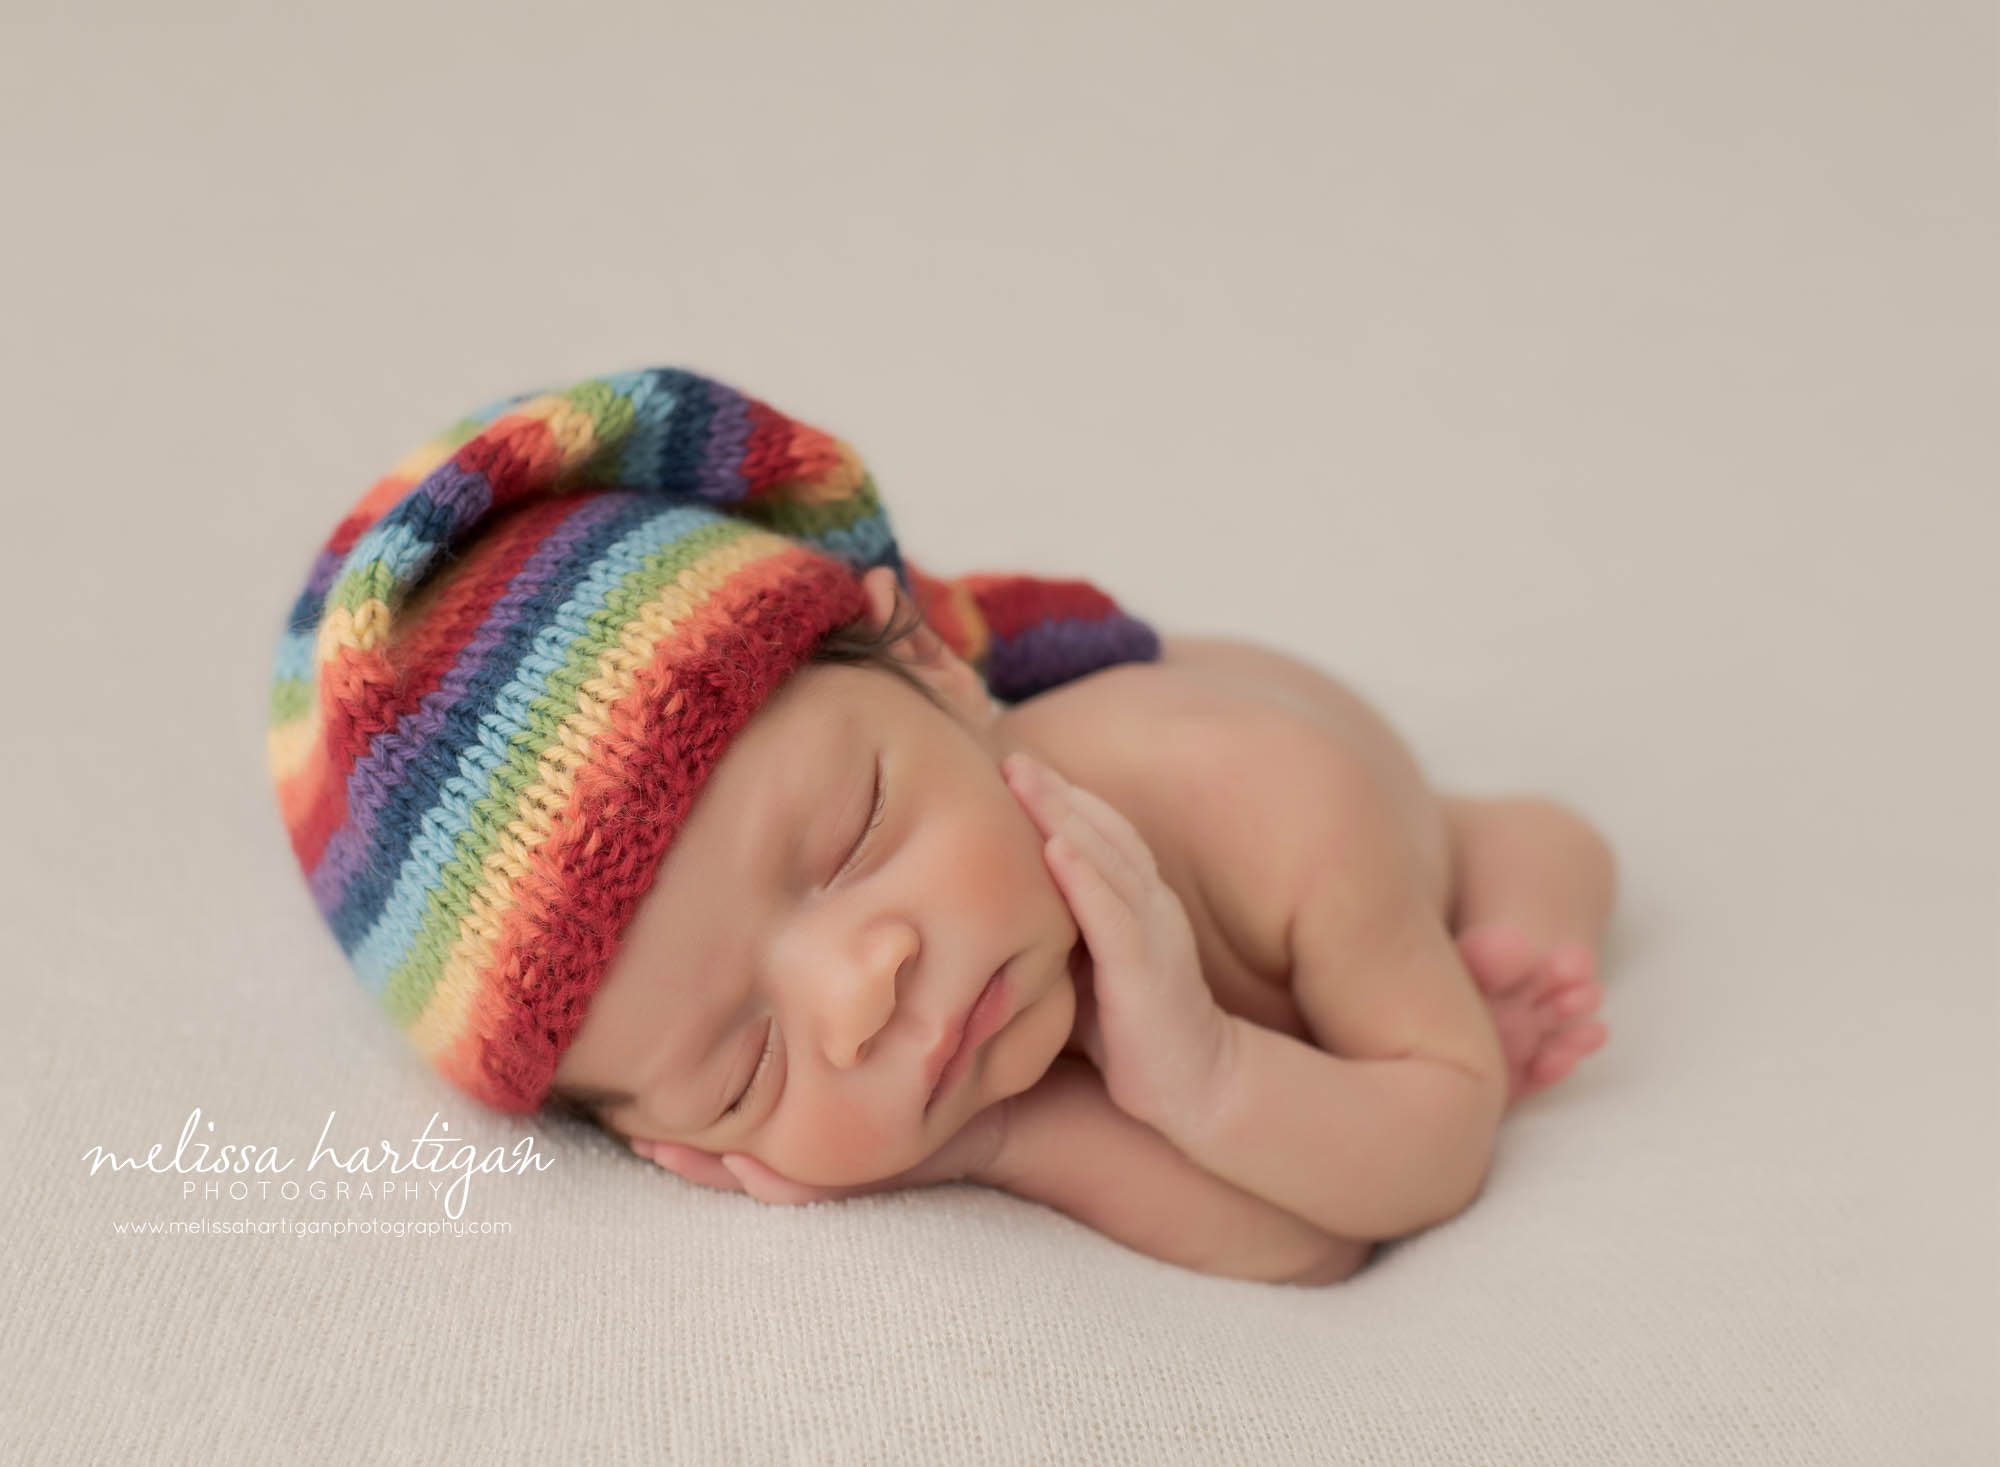 Newborn baby boy posed on side wearing knitted rainbow baby sleepy cap